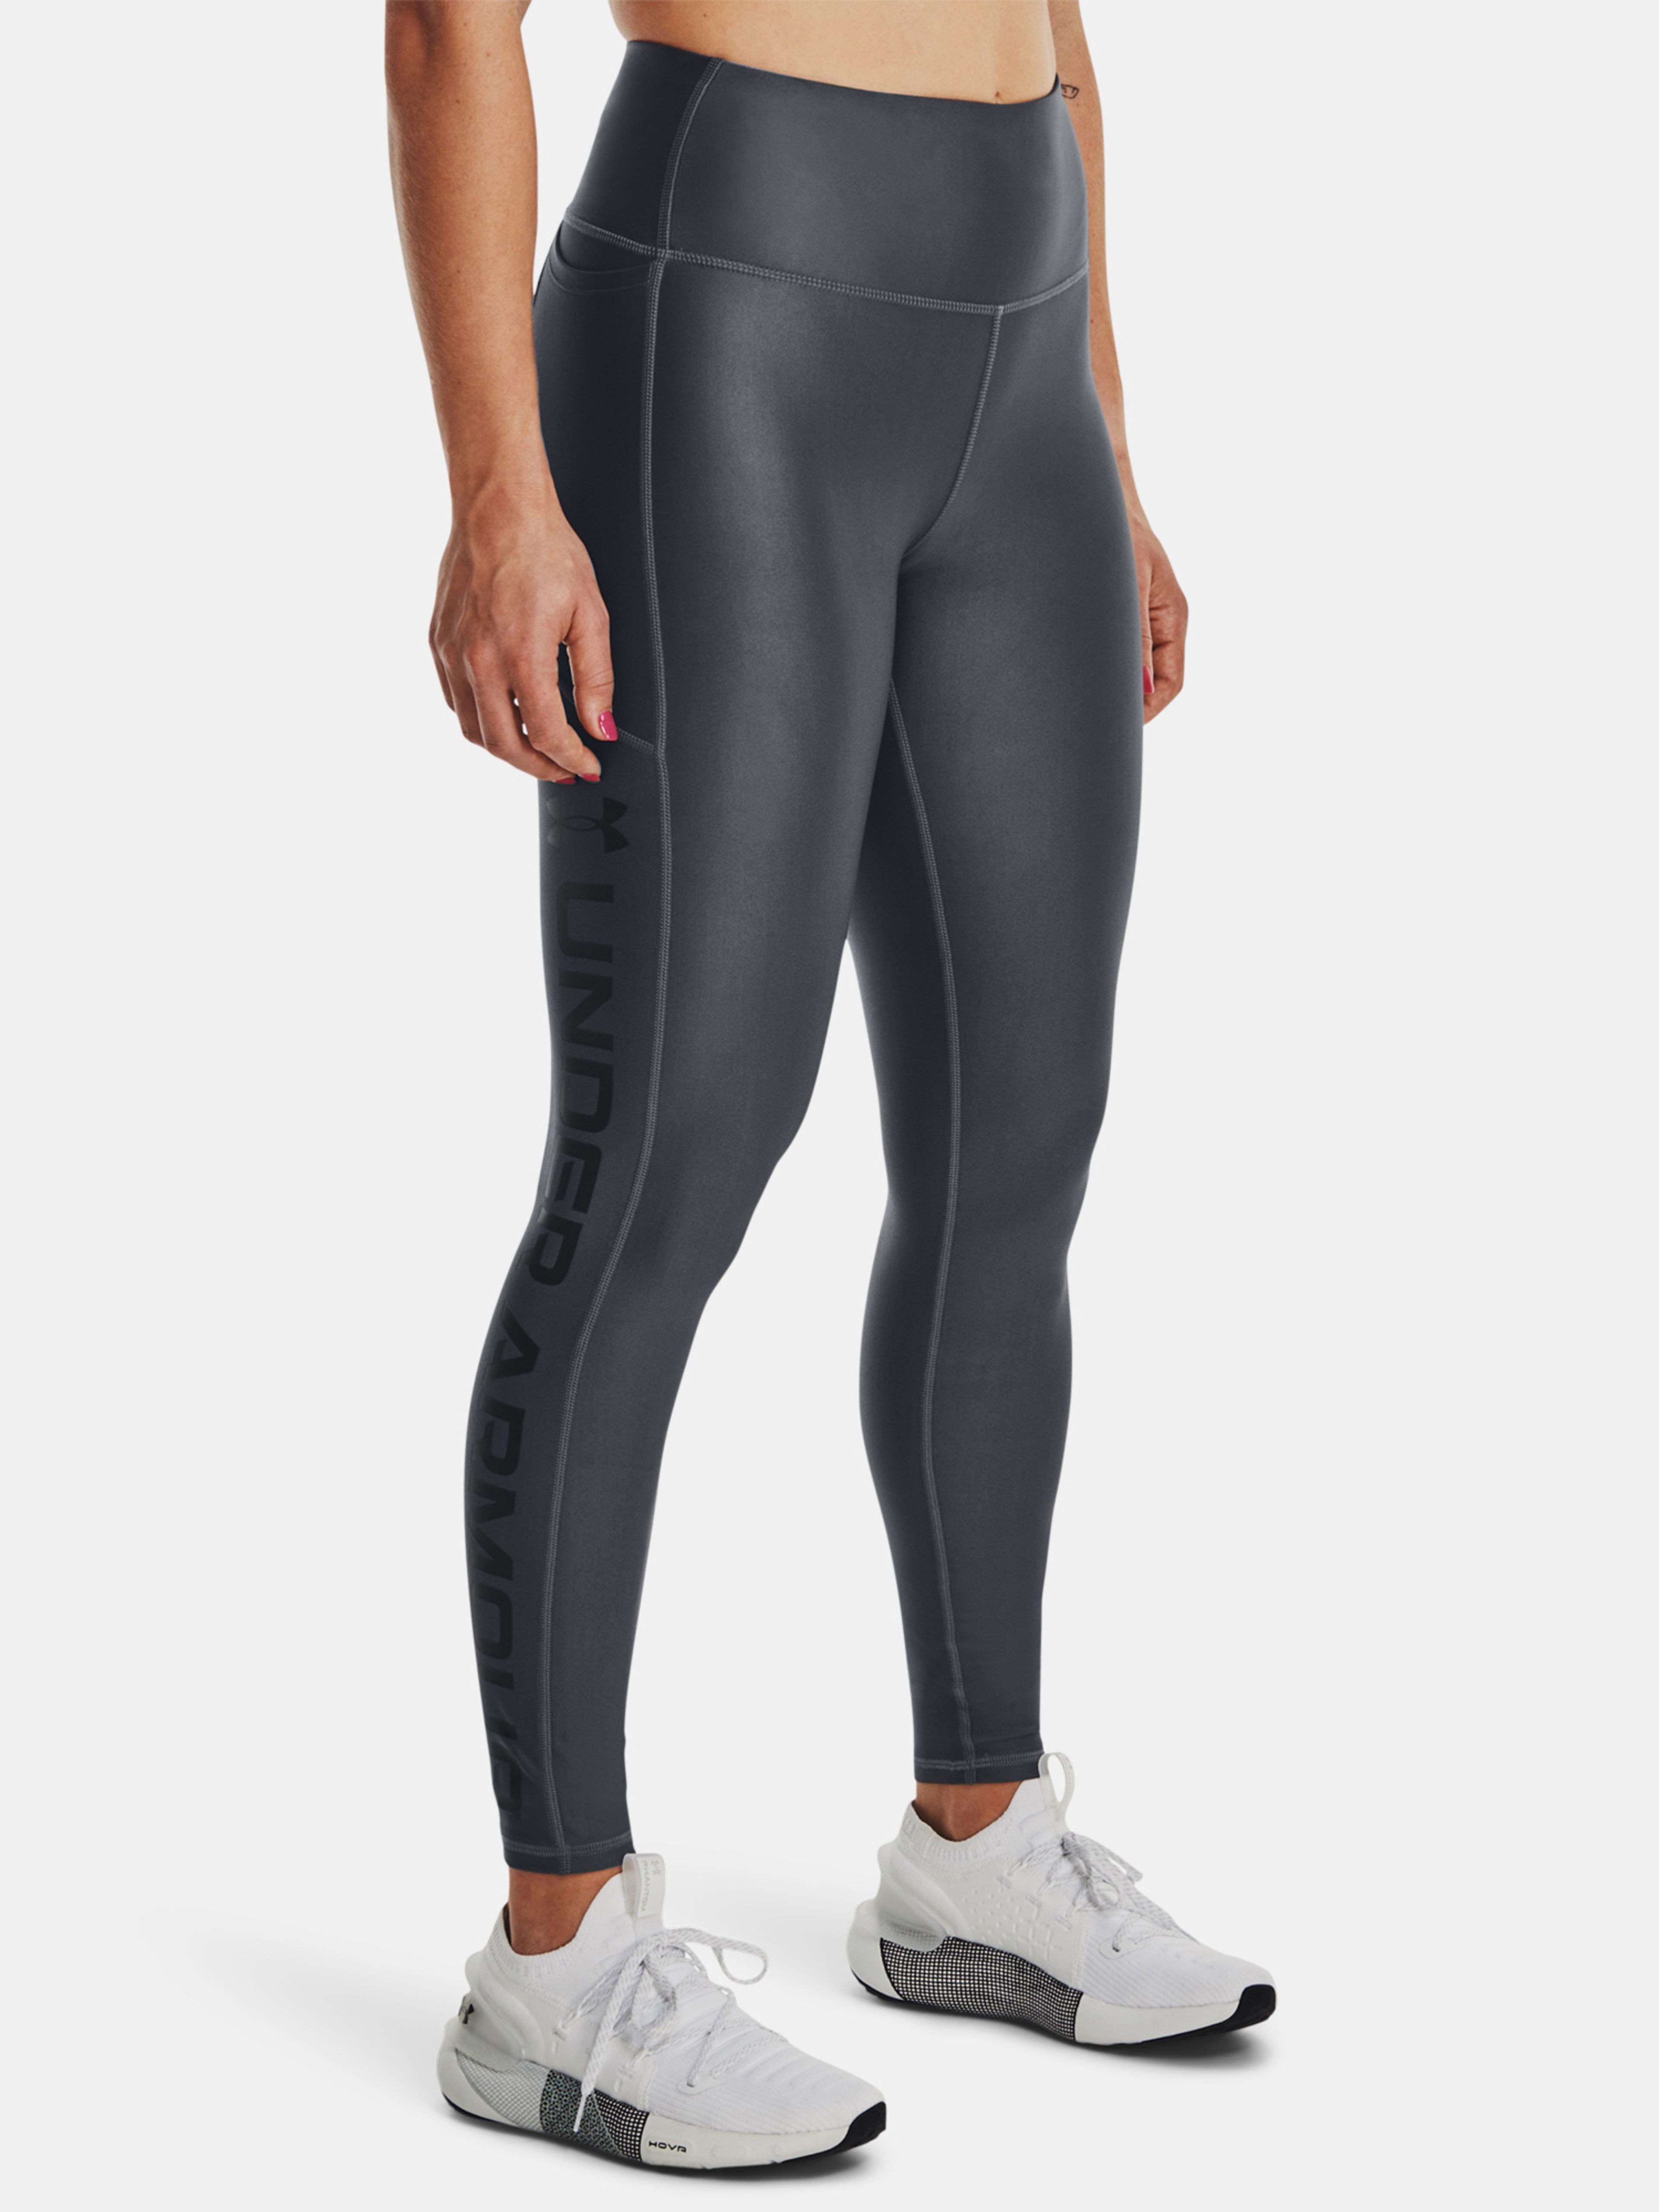  Armour Branded Legging, Gray - women's leggings - UNDER  ARMOUR - 39.36 € - outdoorové oblečení a vybavení shop